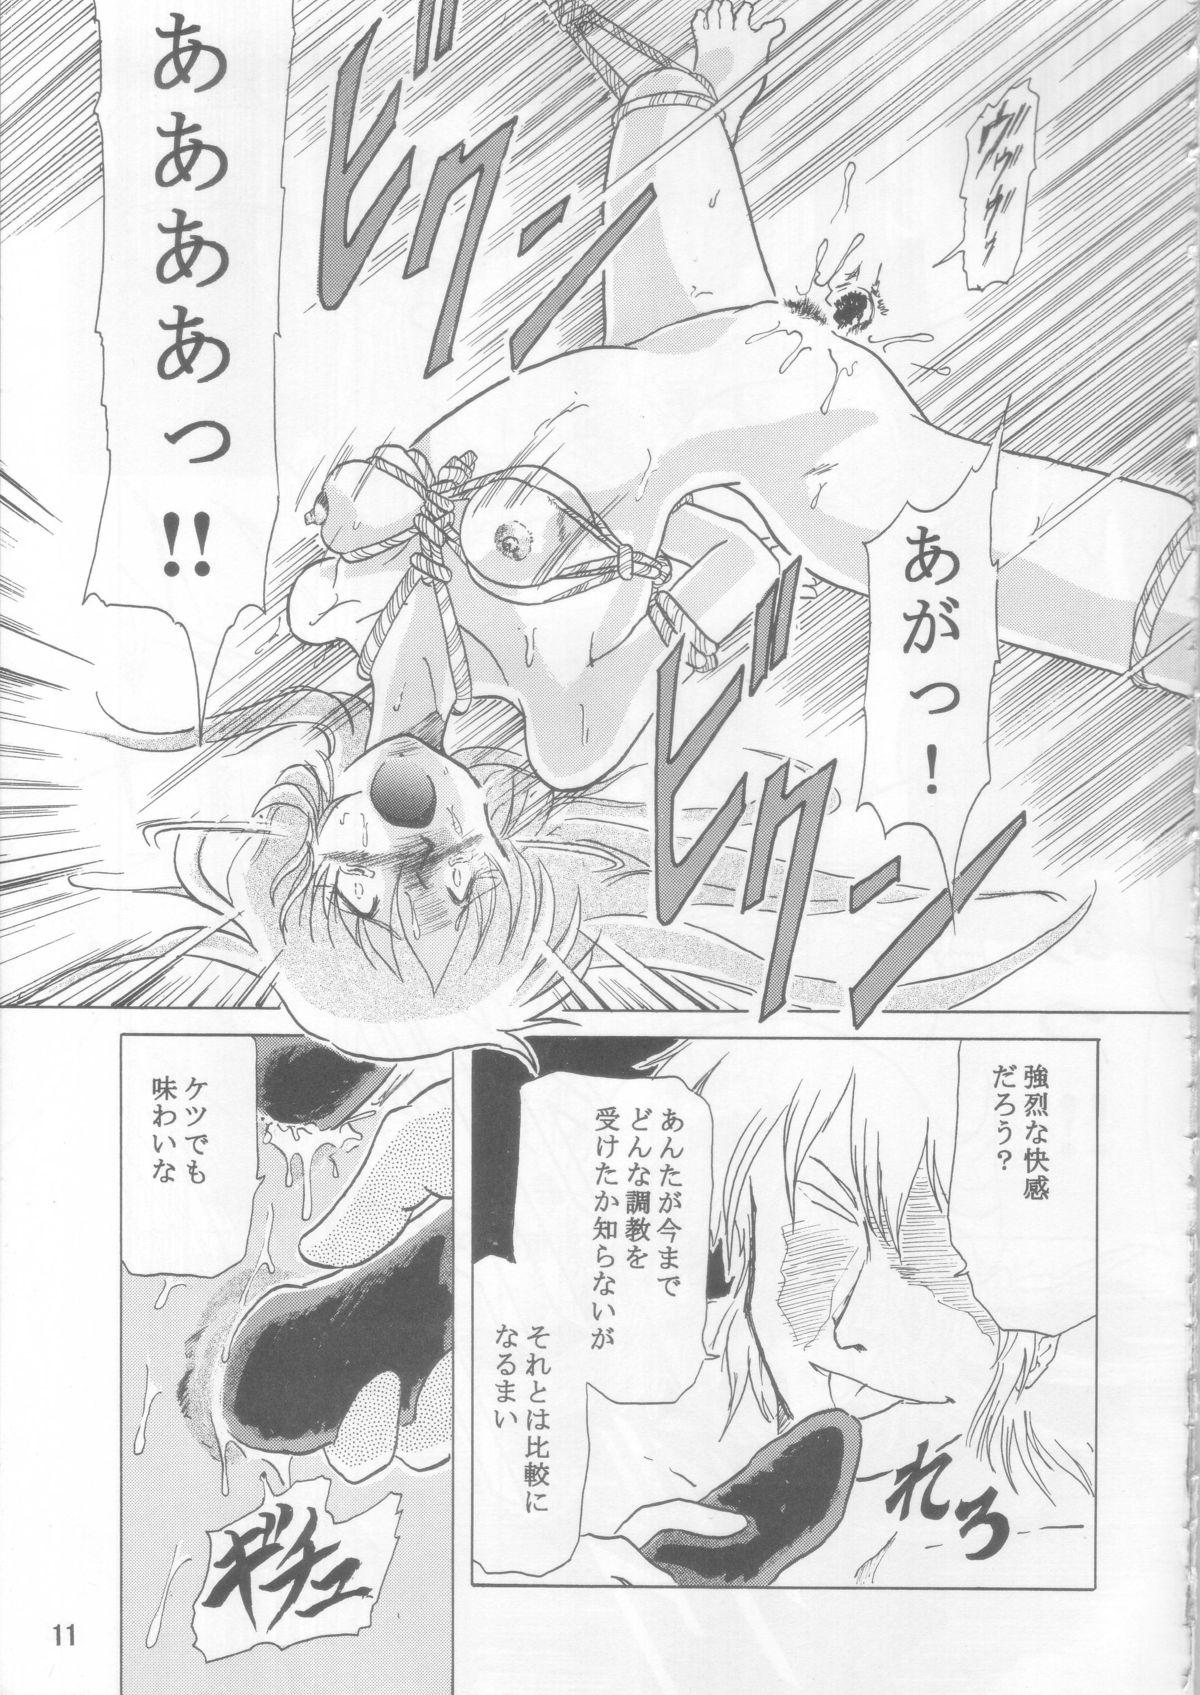 Dick Suckers Ceila sama Jiyuujizai 3 - Aura battler dunbine Freeporn - Page 10